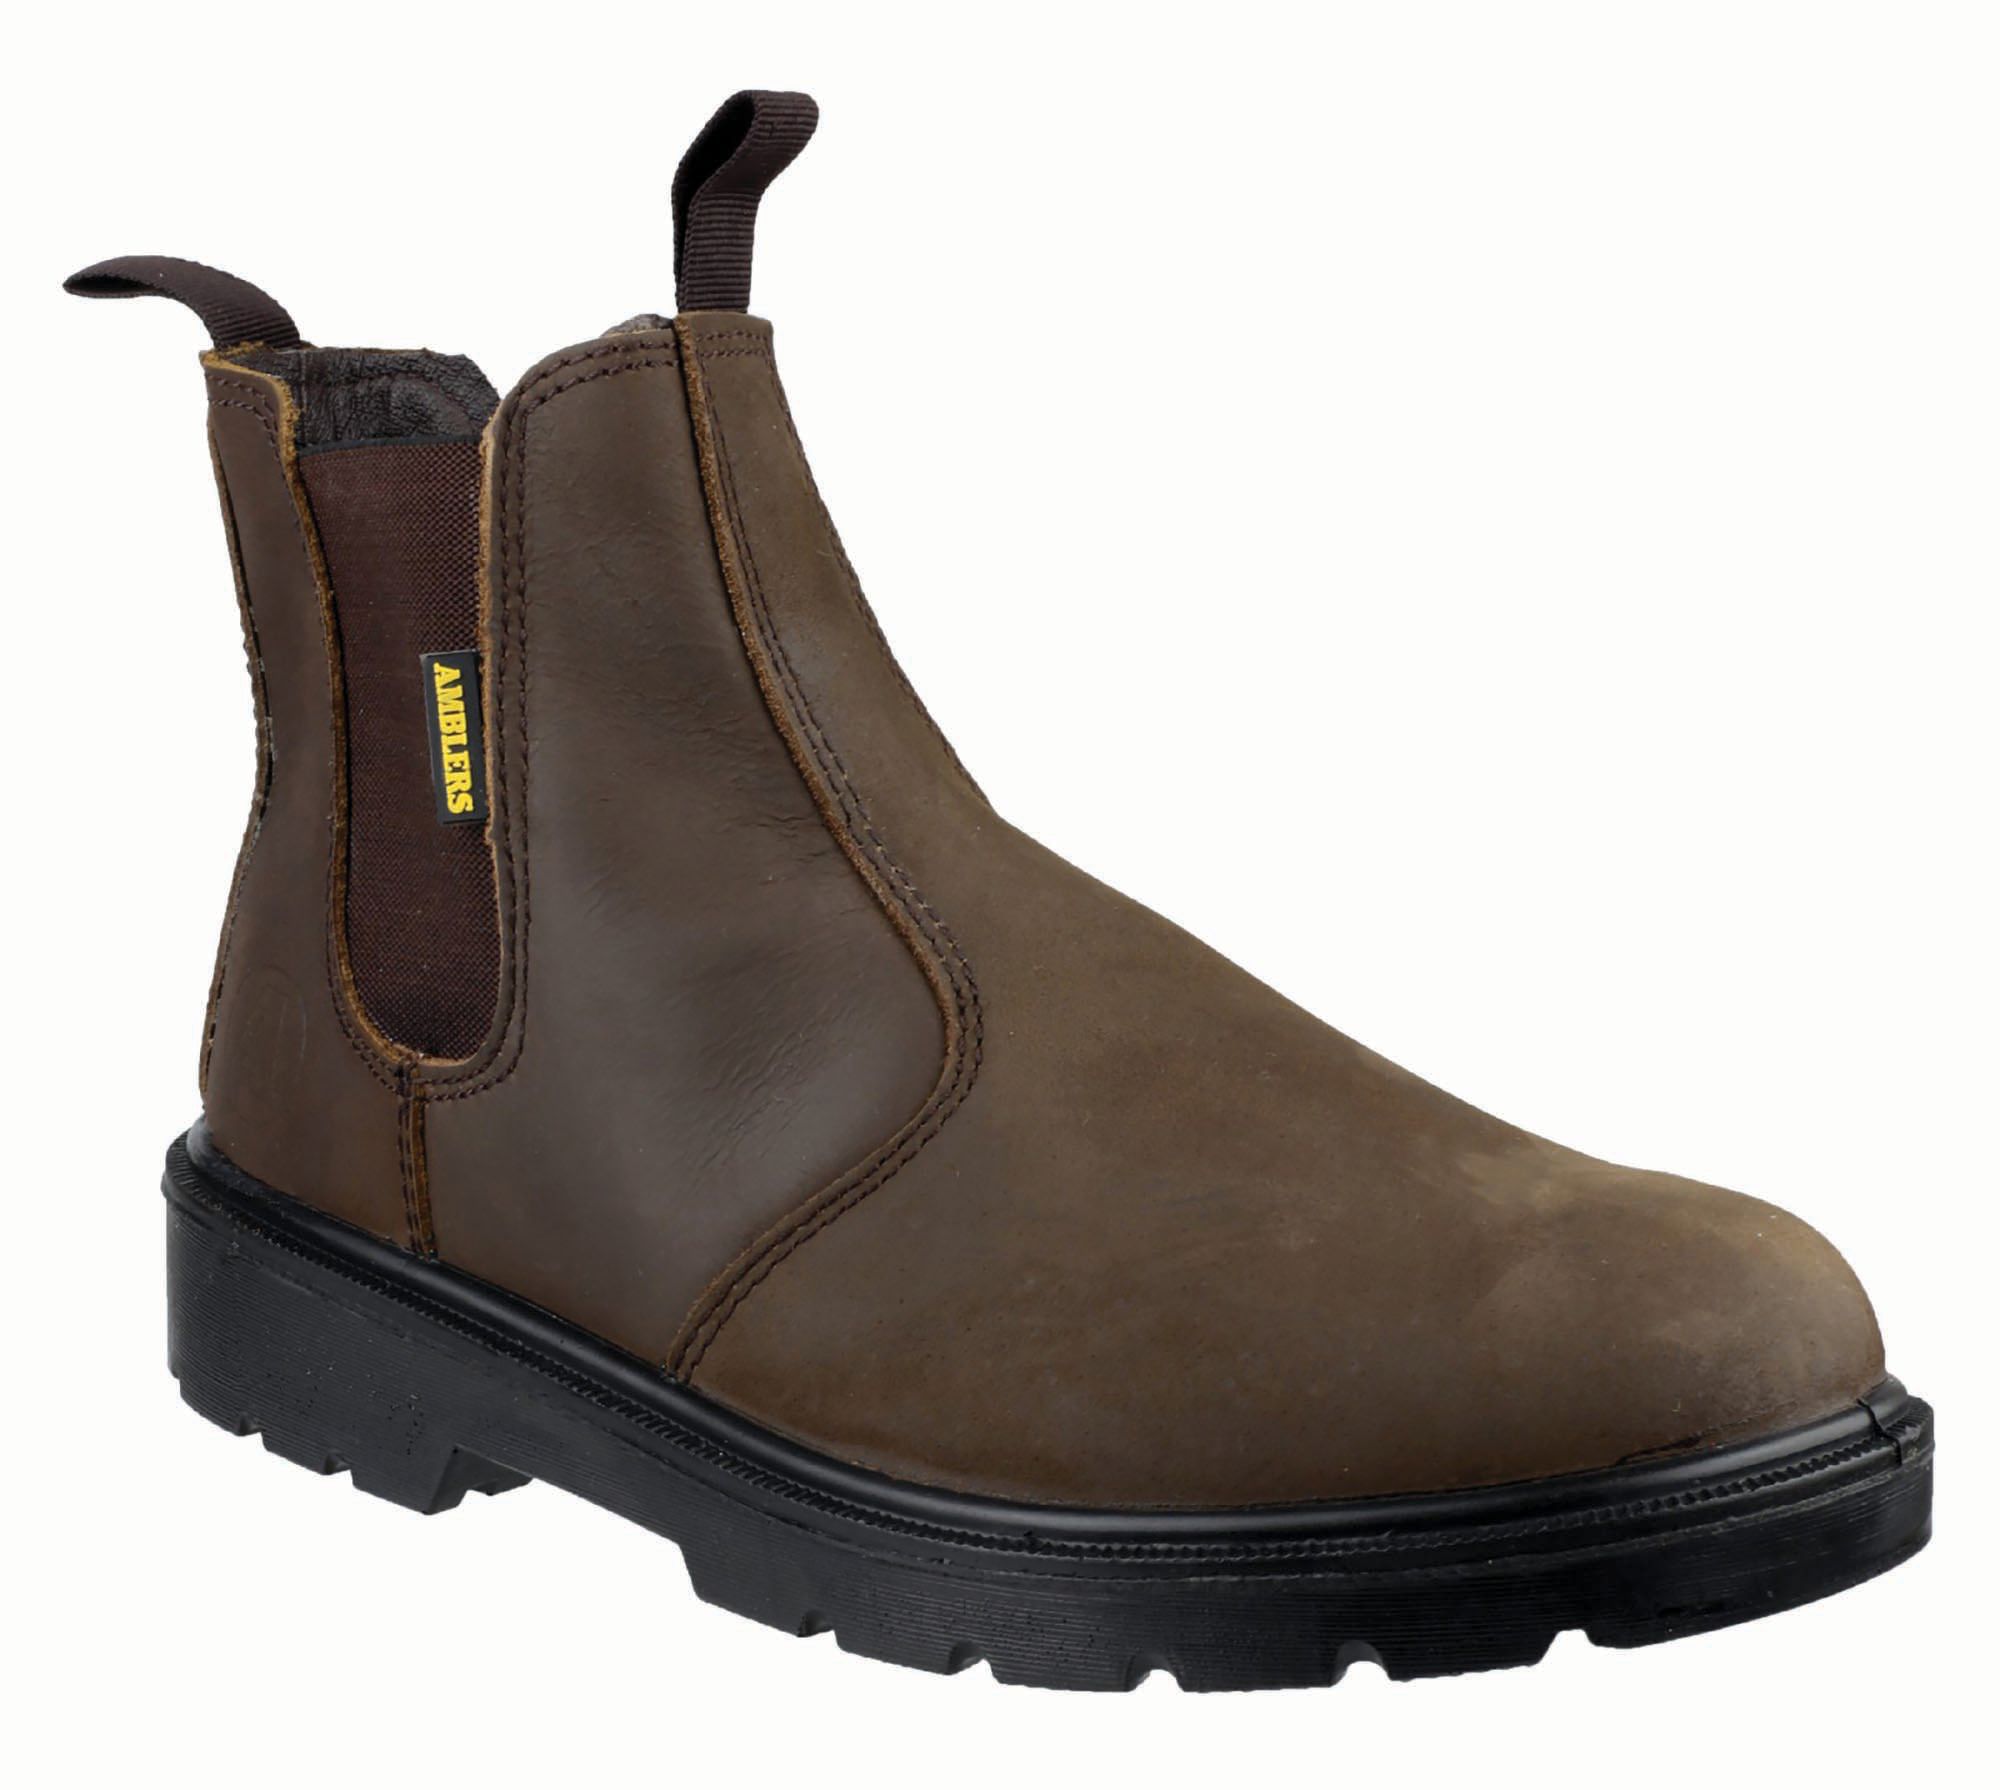 Image of Amblers Safety FS128 Dealer Safety Boot - Brown Size 8